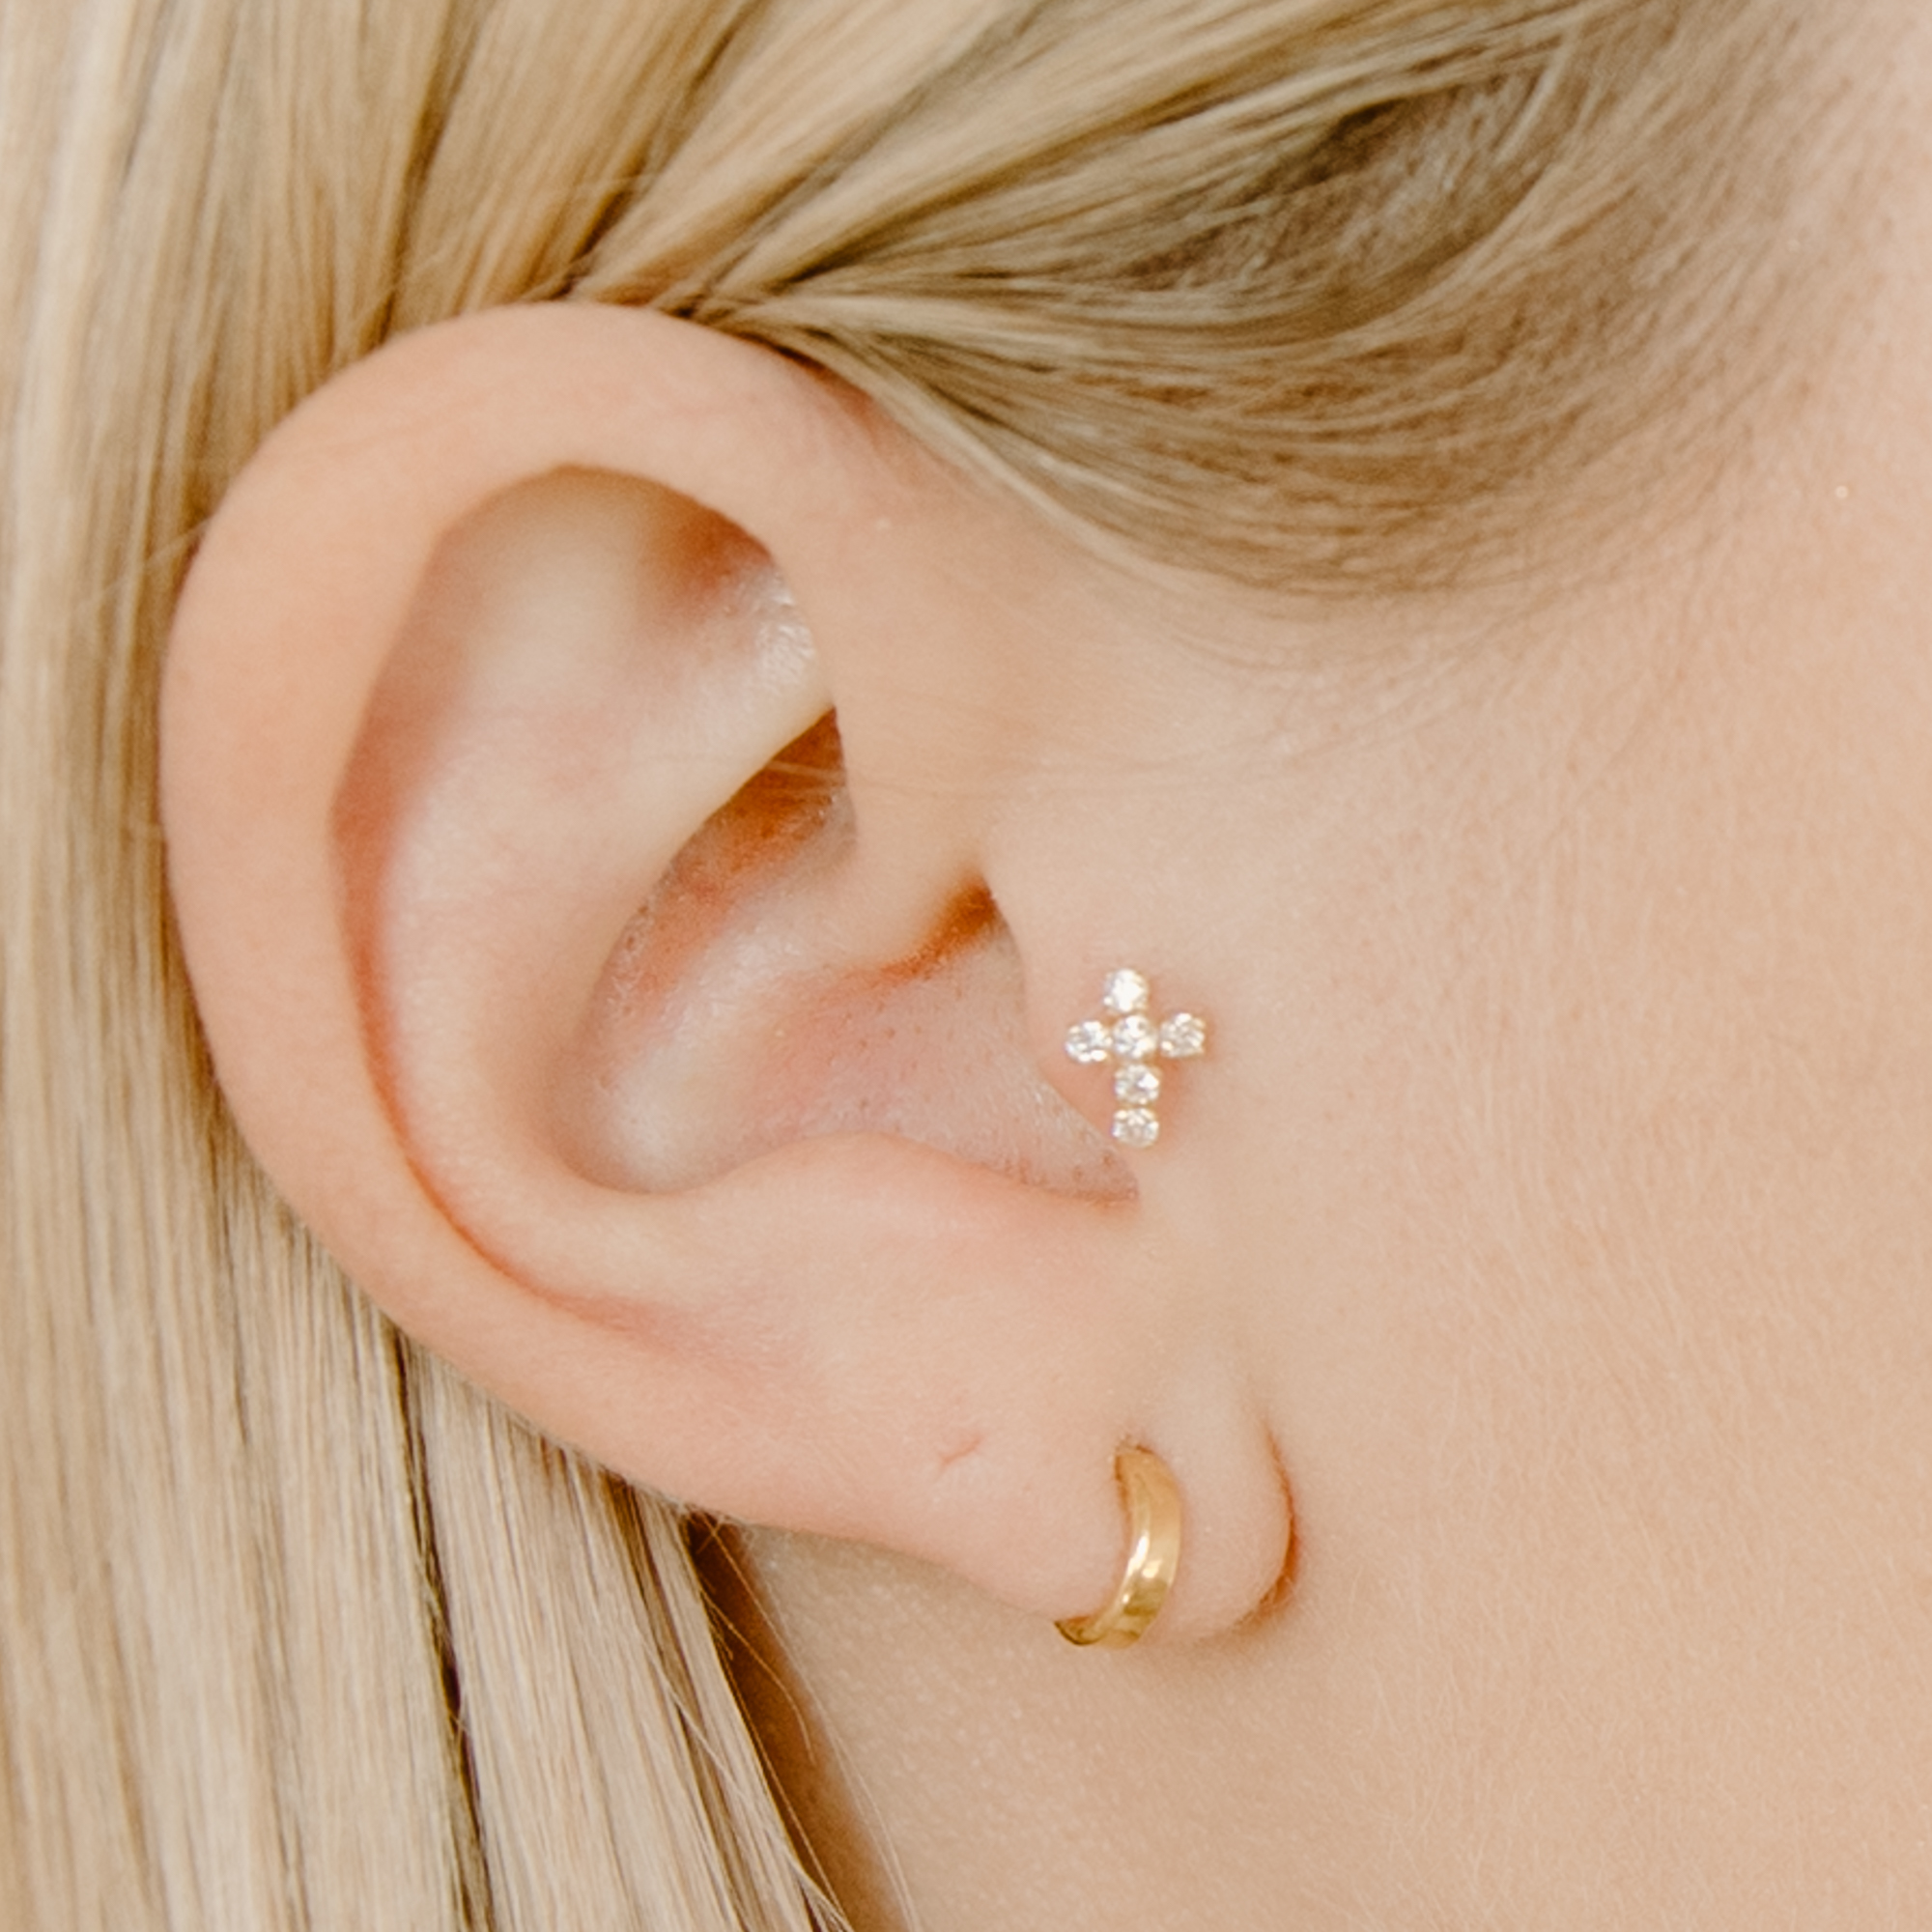 Studex Ear Piercing Earrings SHORT POST Baby Studs Gold India | Ubuy-sgquangbinhtourist.com.vn